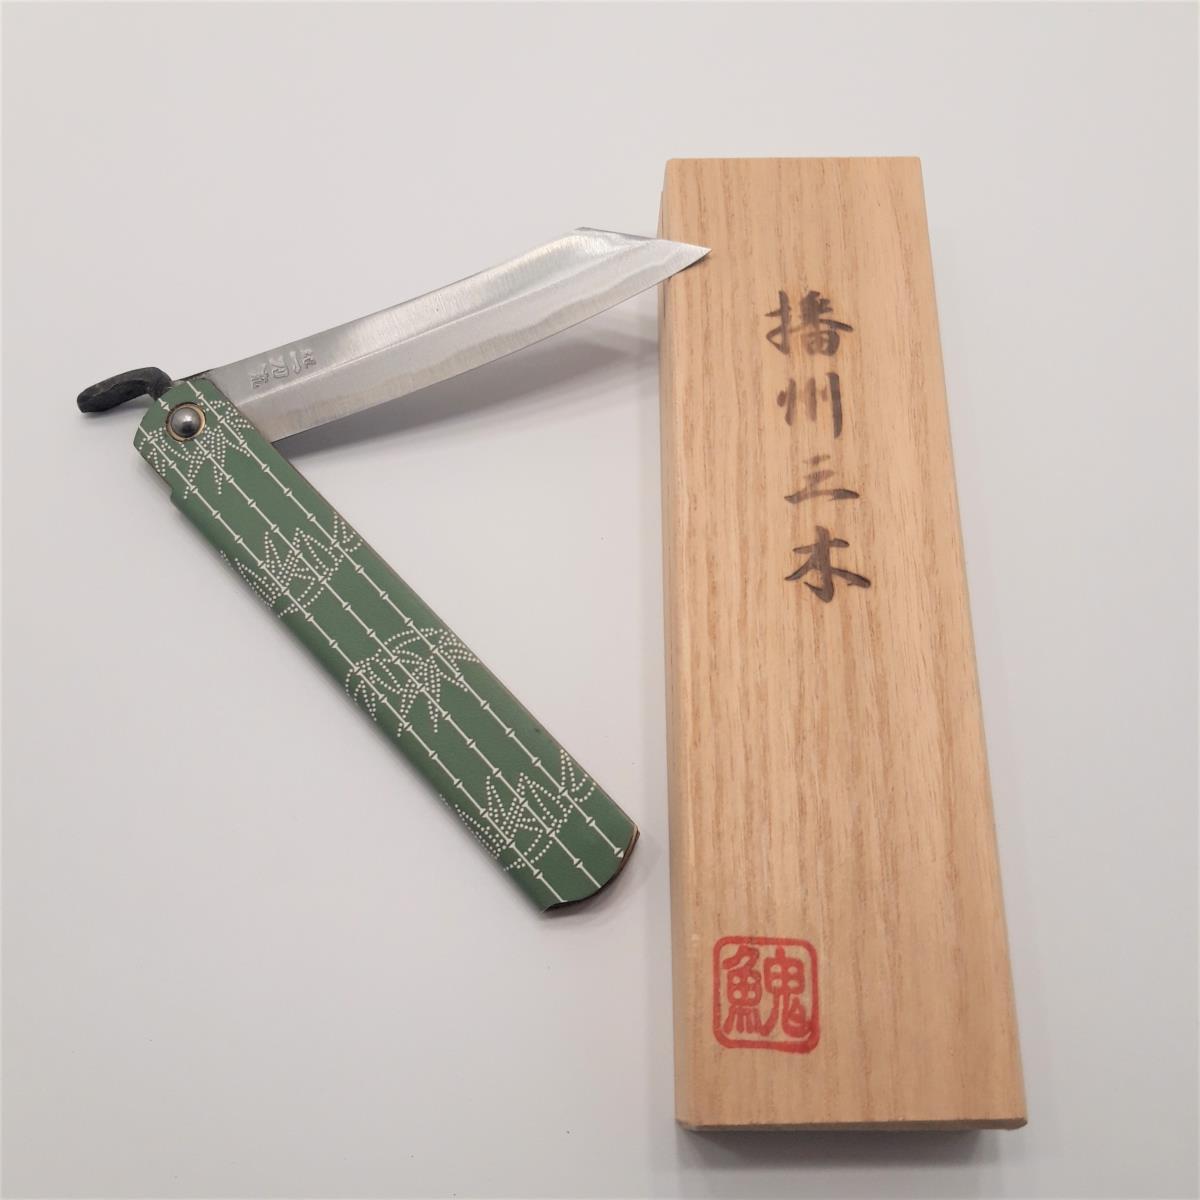 Higonokami "Take", motif cannes de bambous